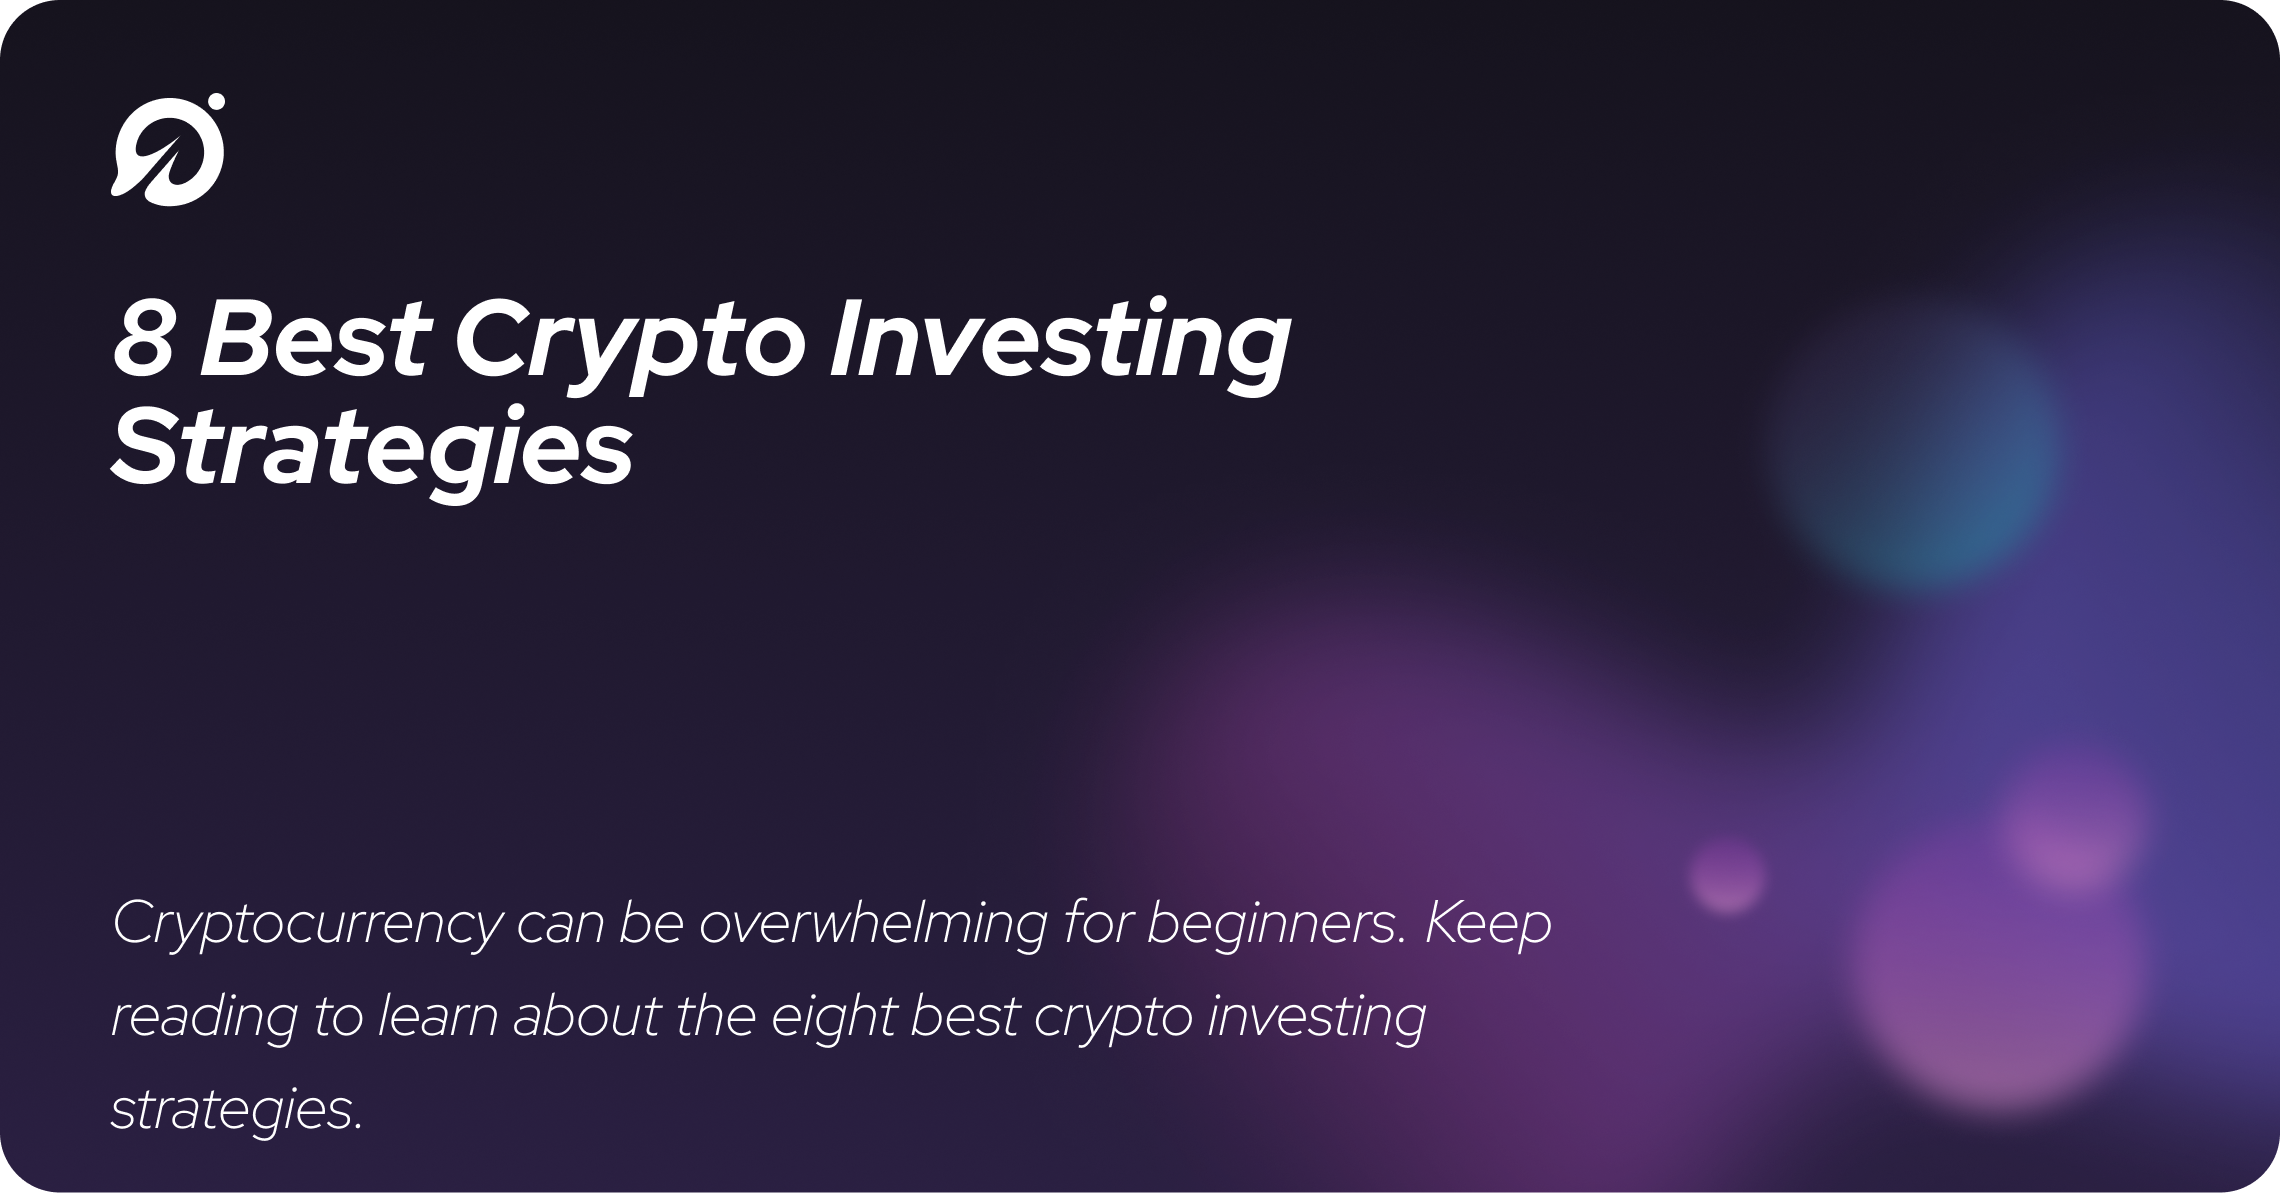 8 Best Crypto Investing Strategies